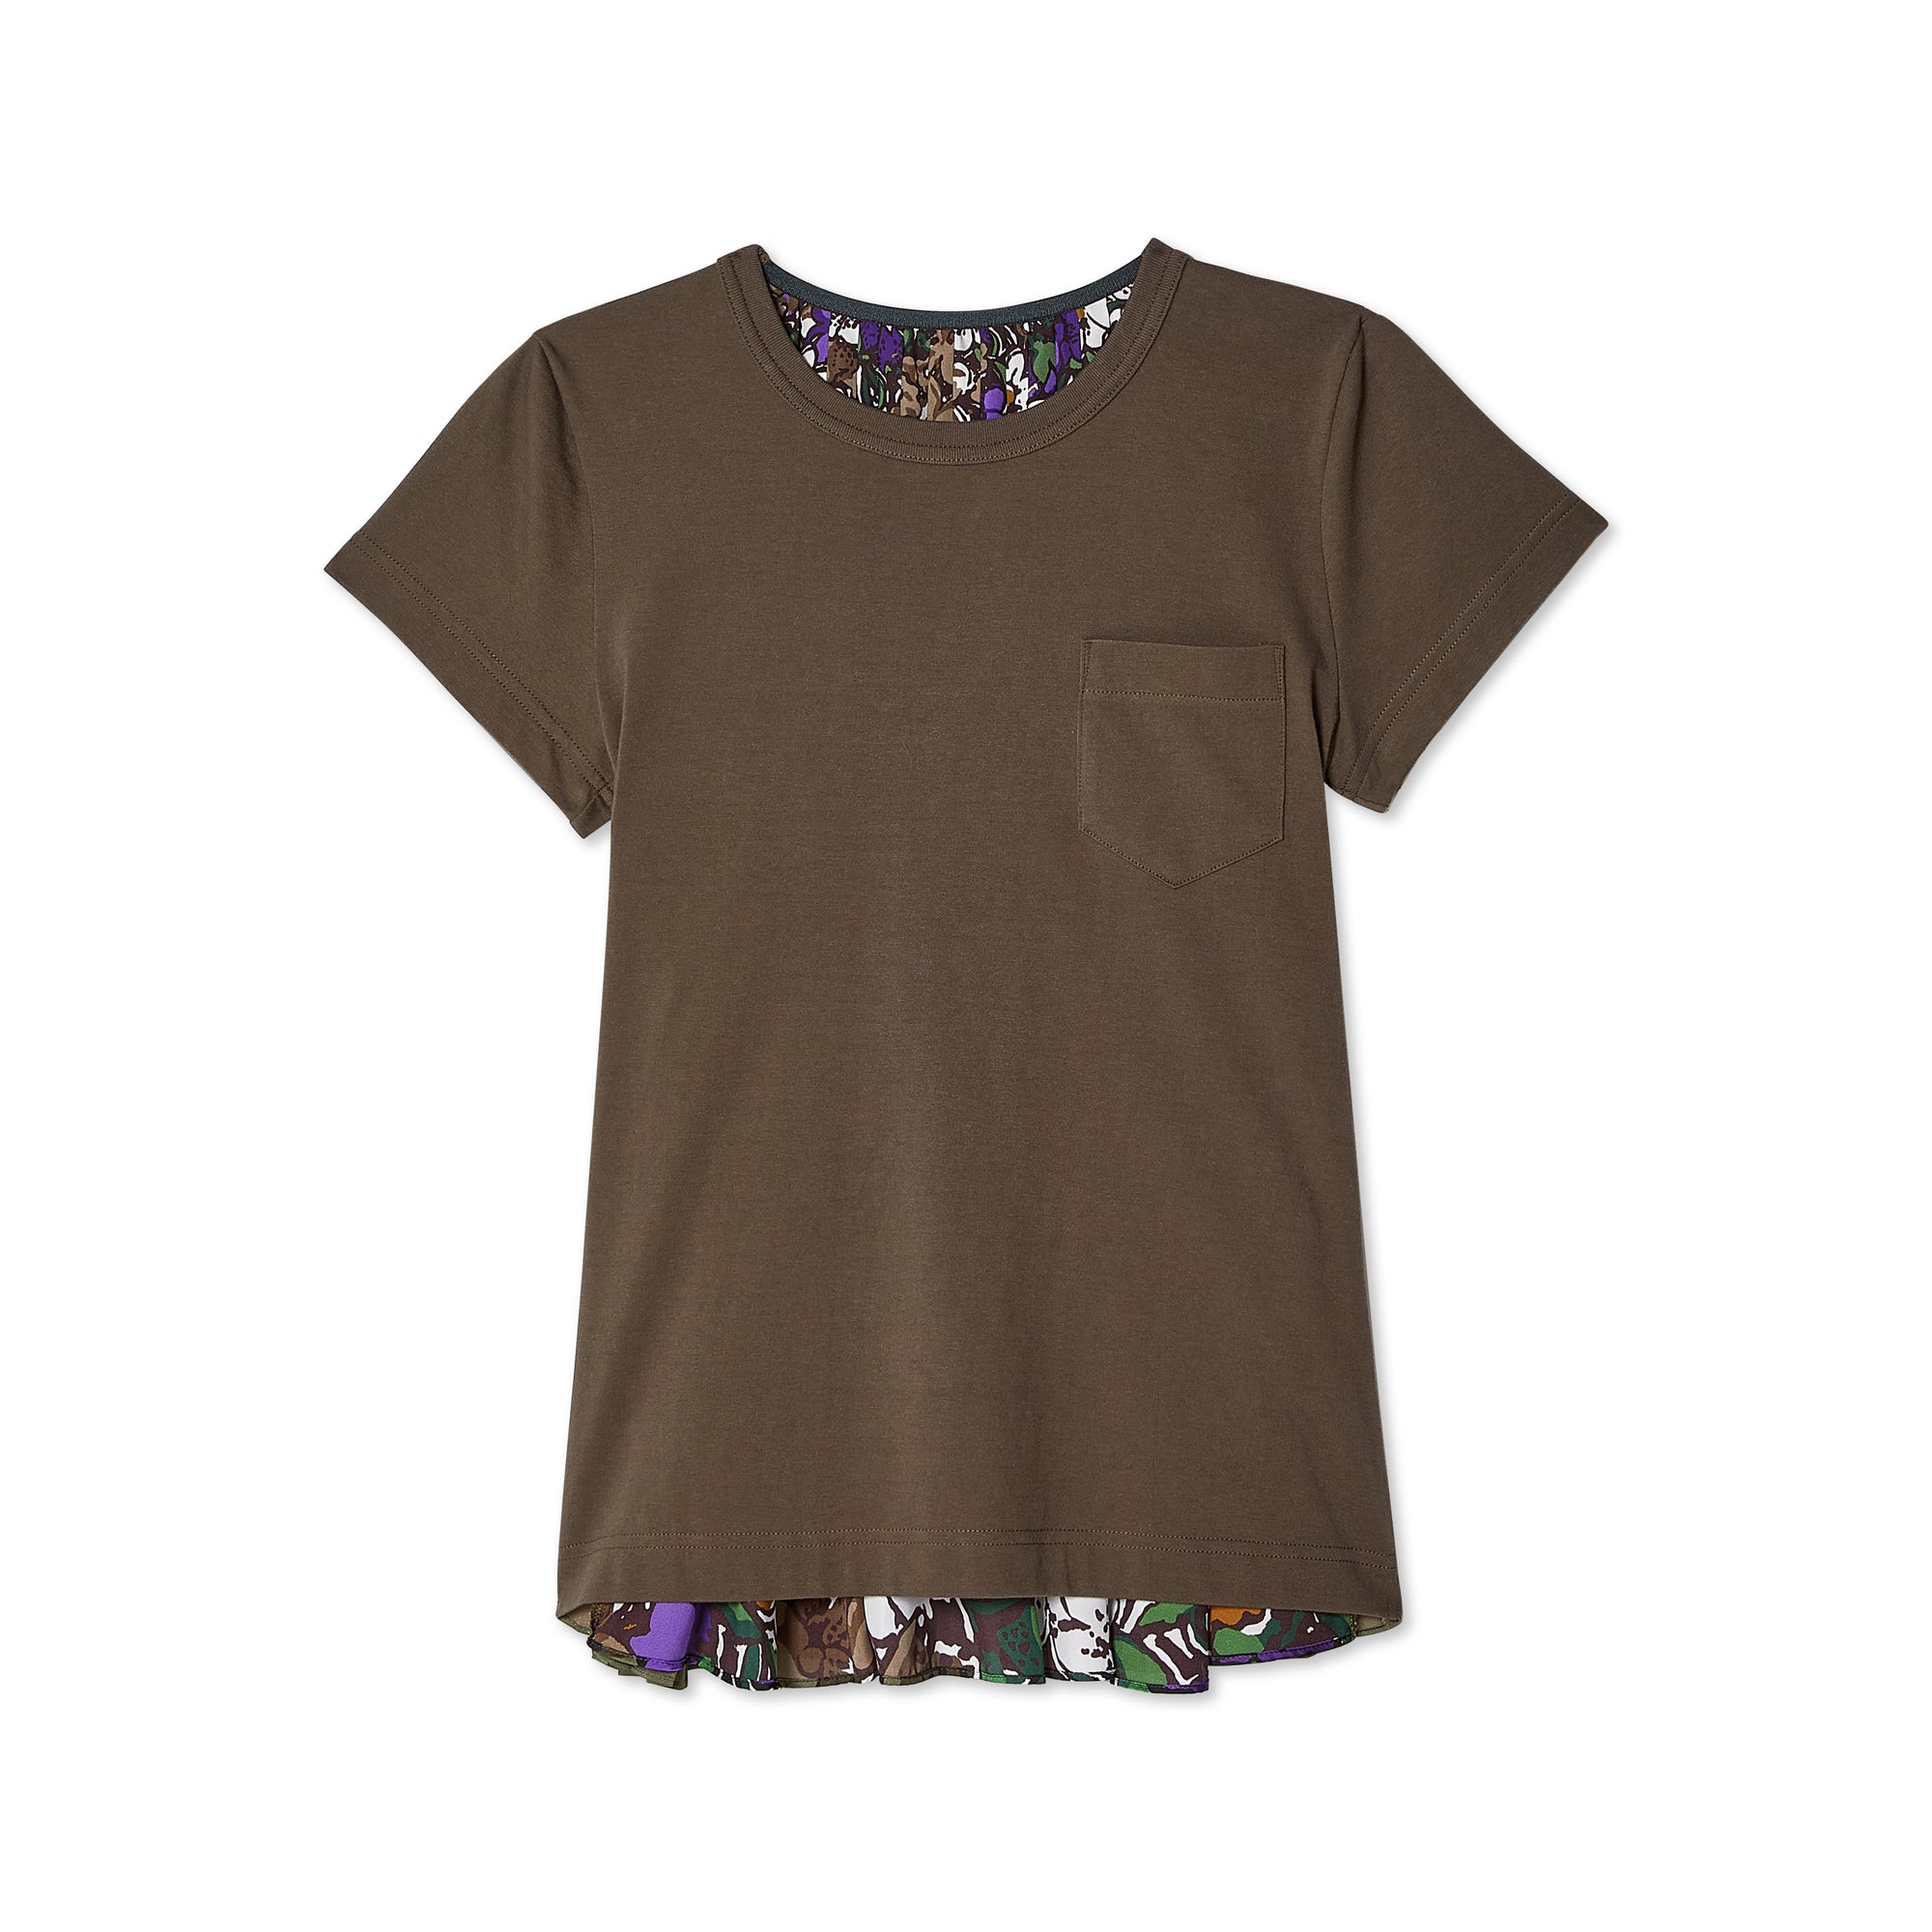 sacai - Women's Floral Print T-Shirt - (Brown/Purple) view 1